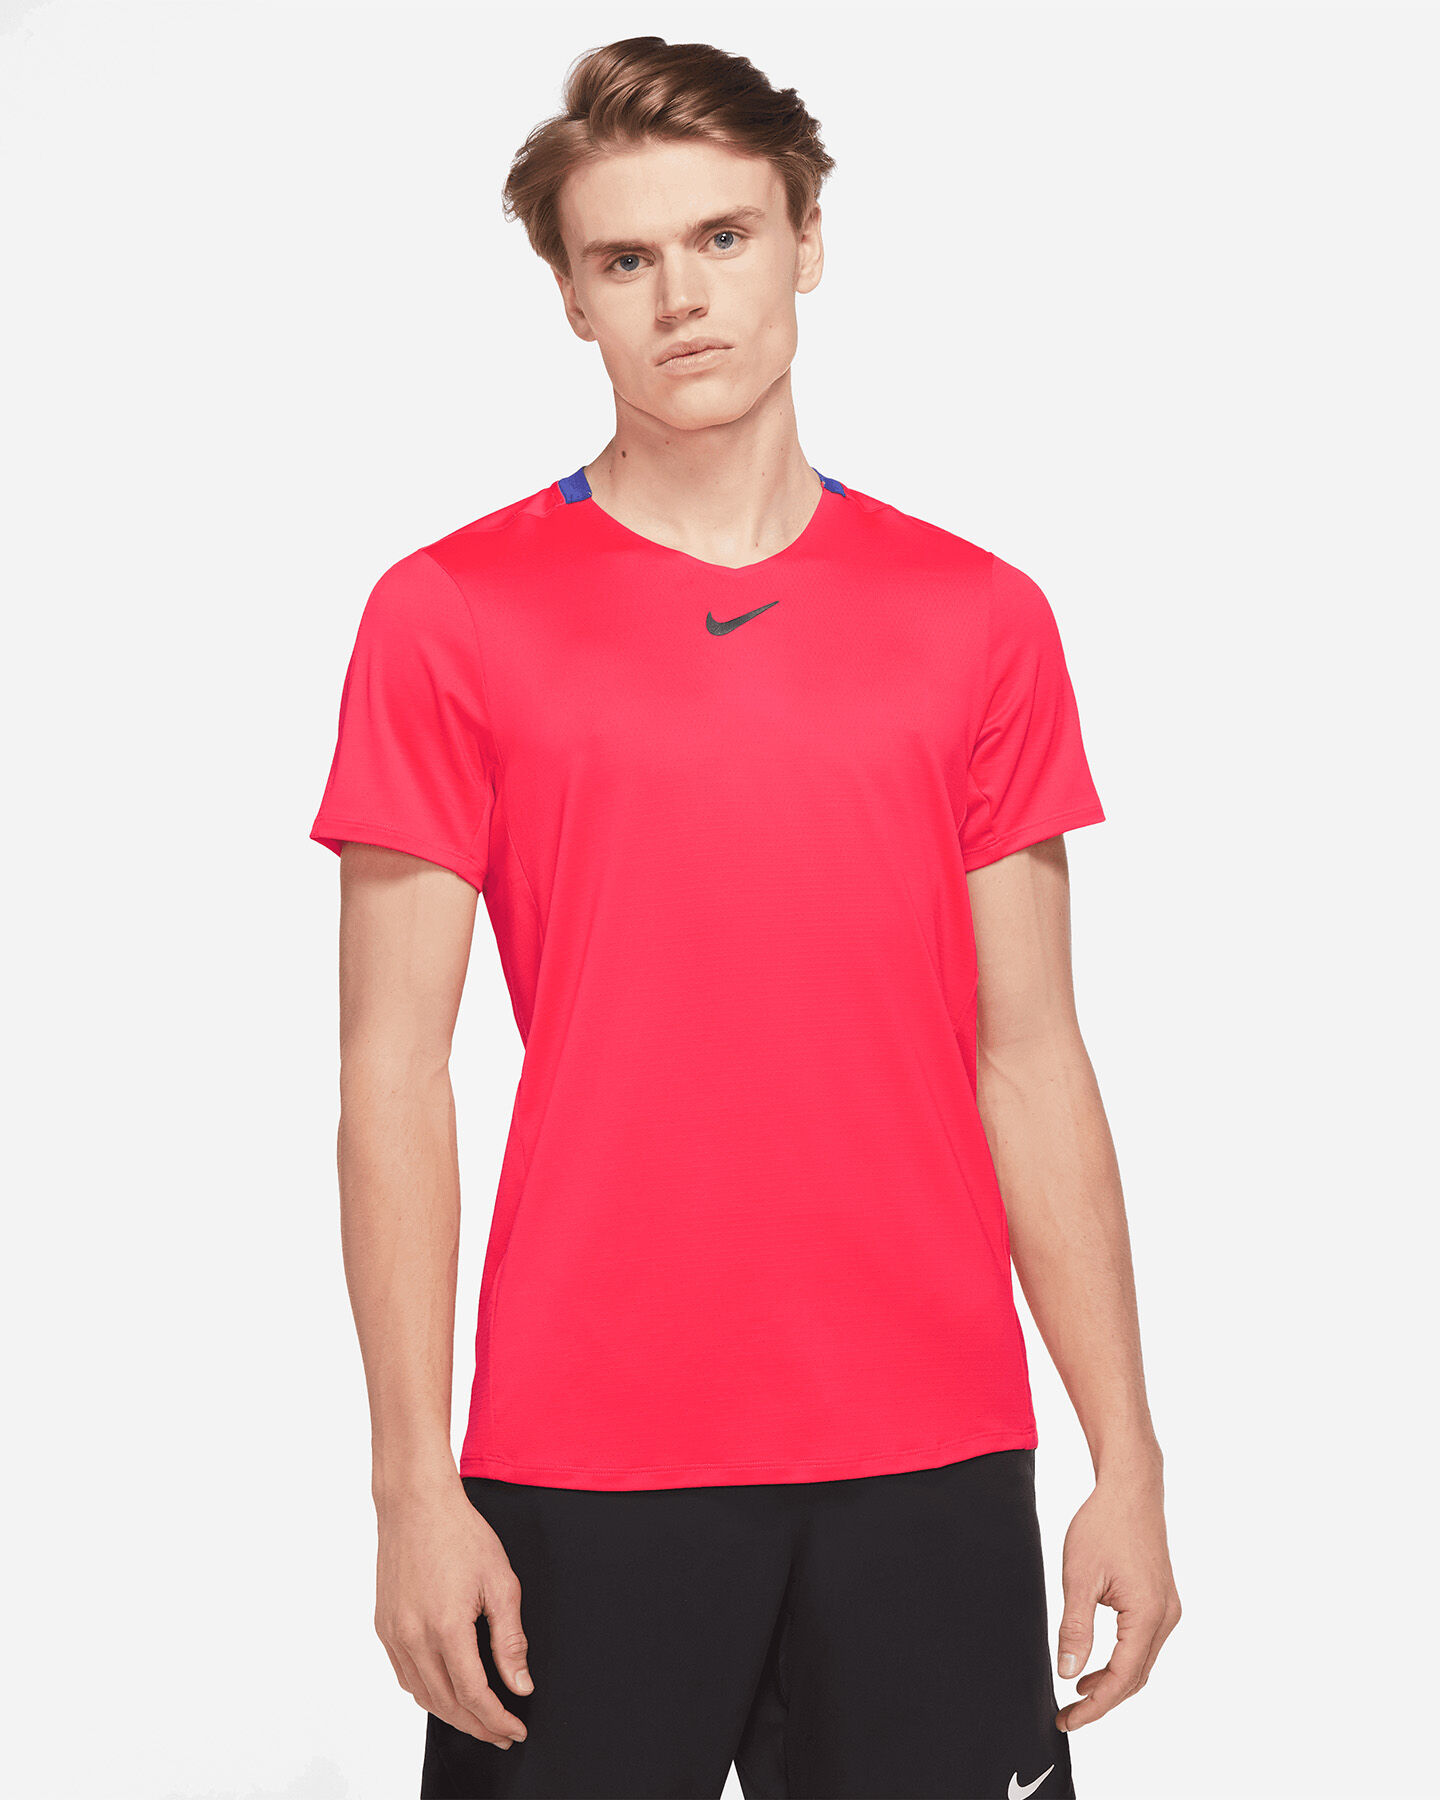  T-Shirt tennis NIKE ADVANTAGE M S5455804|635|S scatto 0